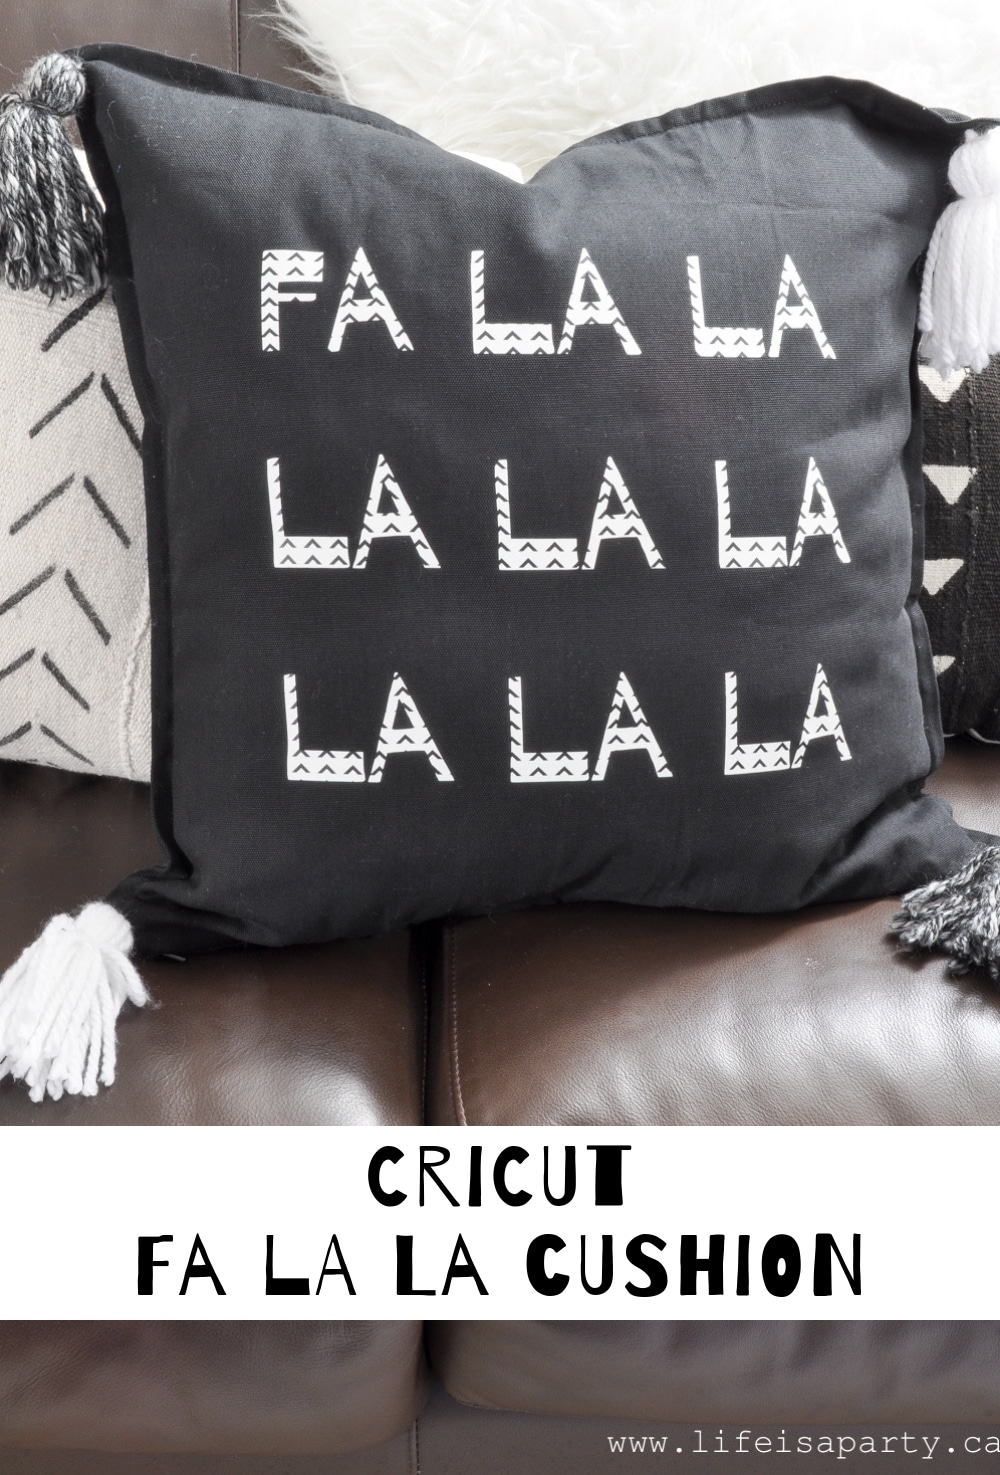 Cricut Fa La La Cushion: this fun holiday cushion is easy to DIY with your Cricut machine, and some handmade yarn tassels.